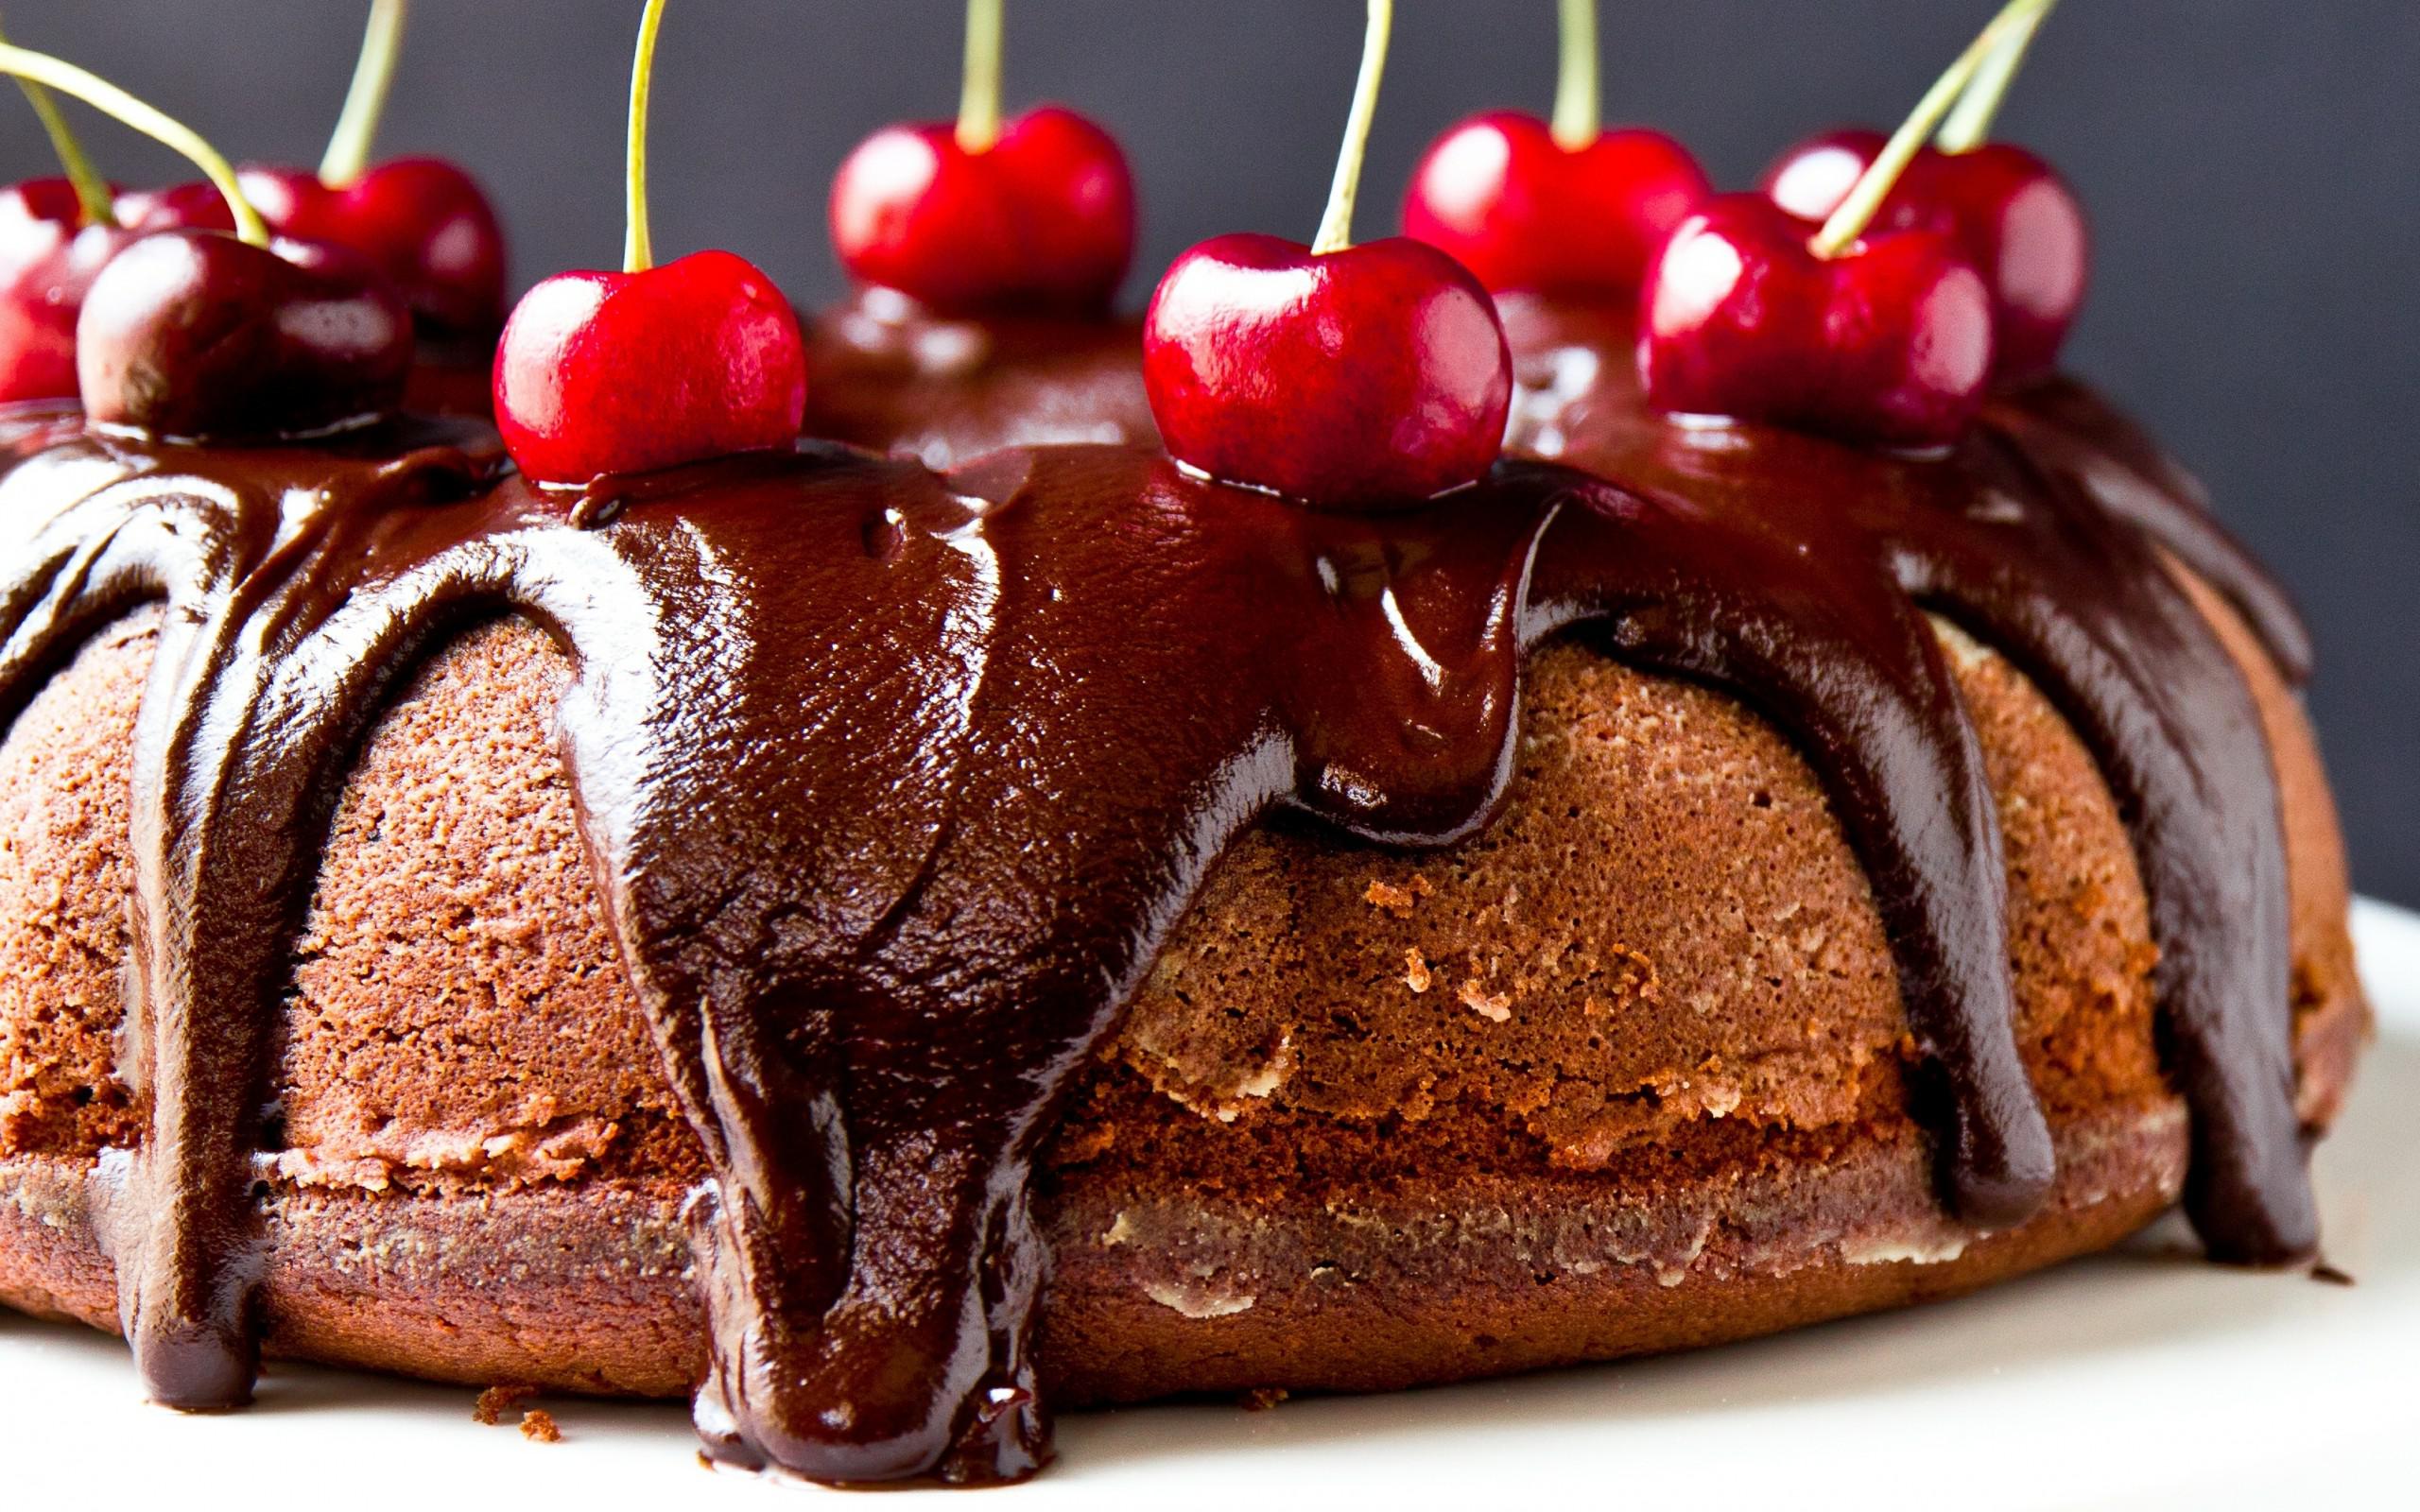 Chocolate Cake Pic Hd - HD Wallpaper 